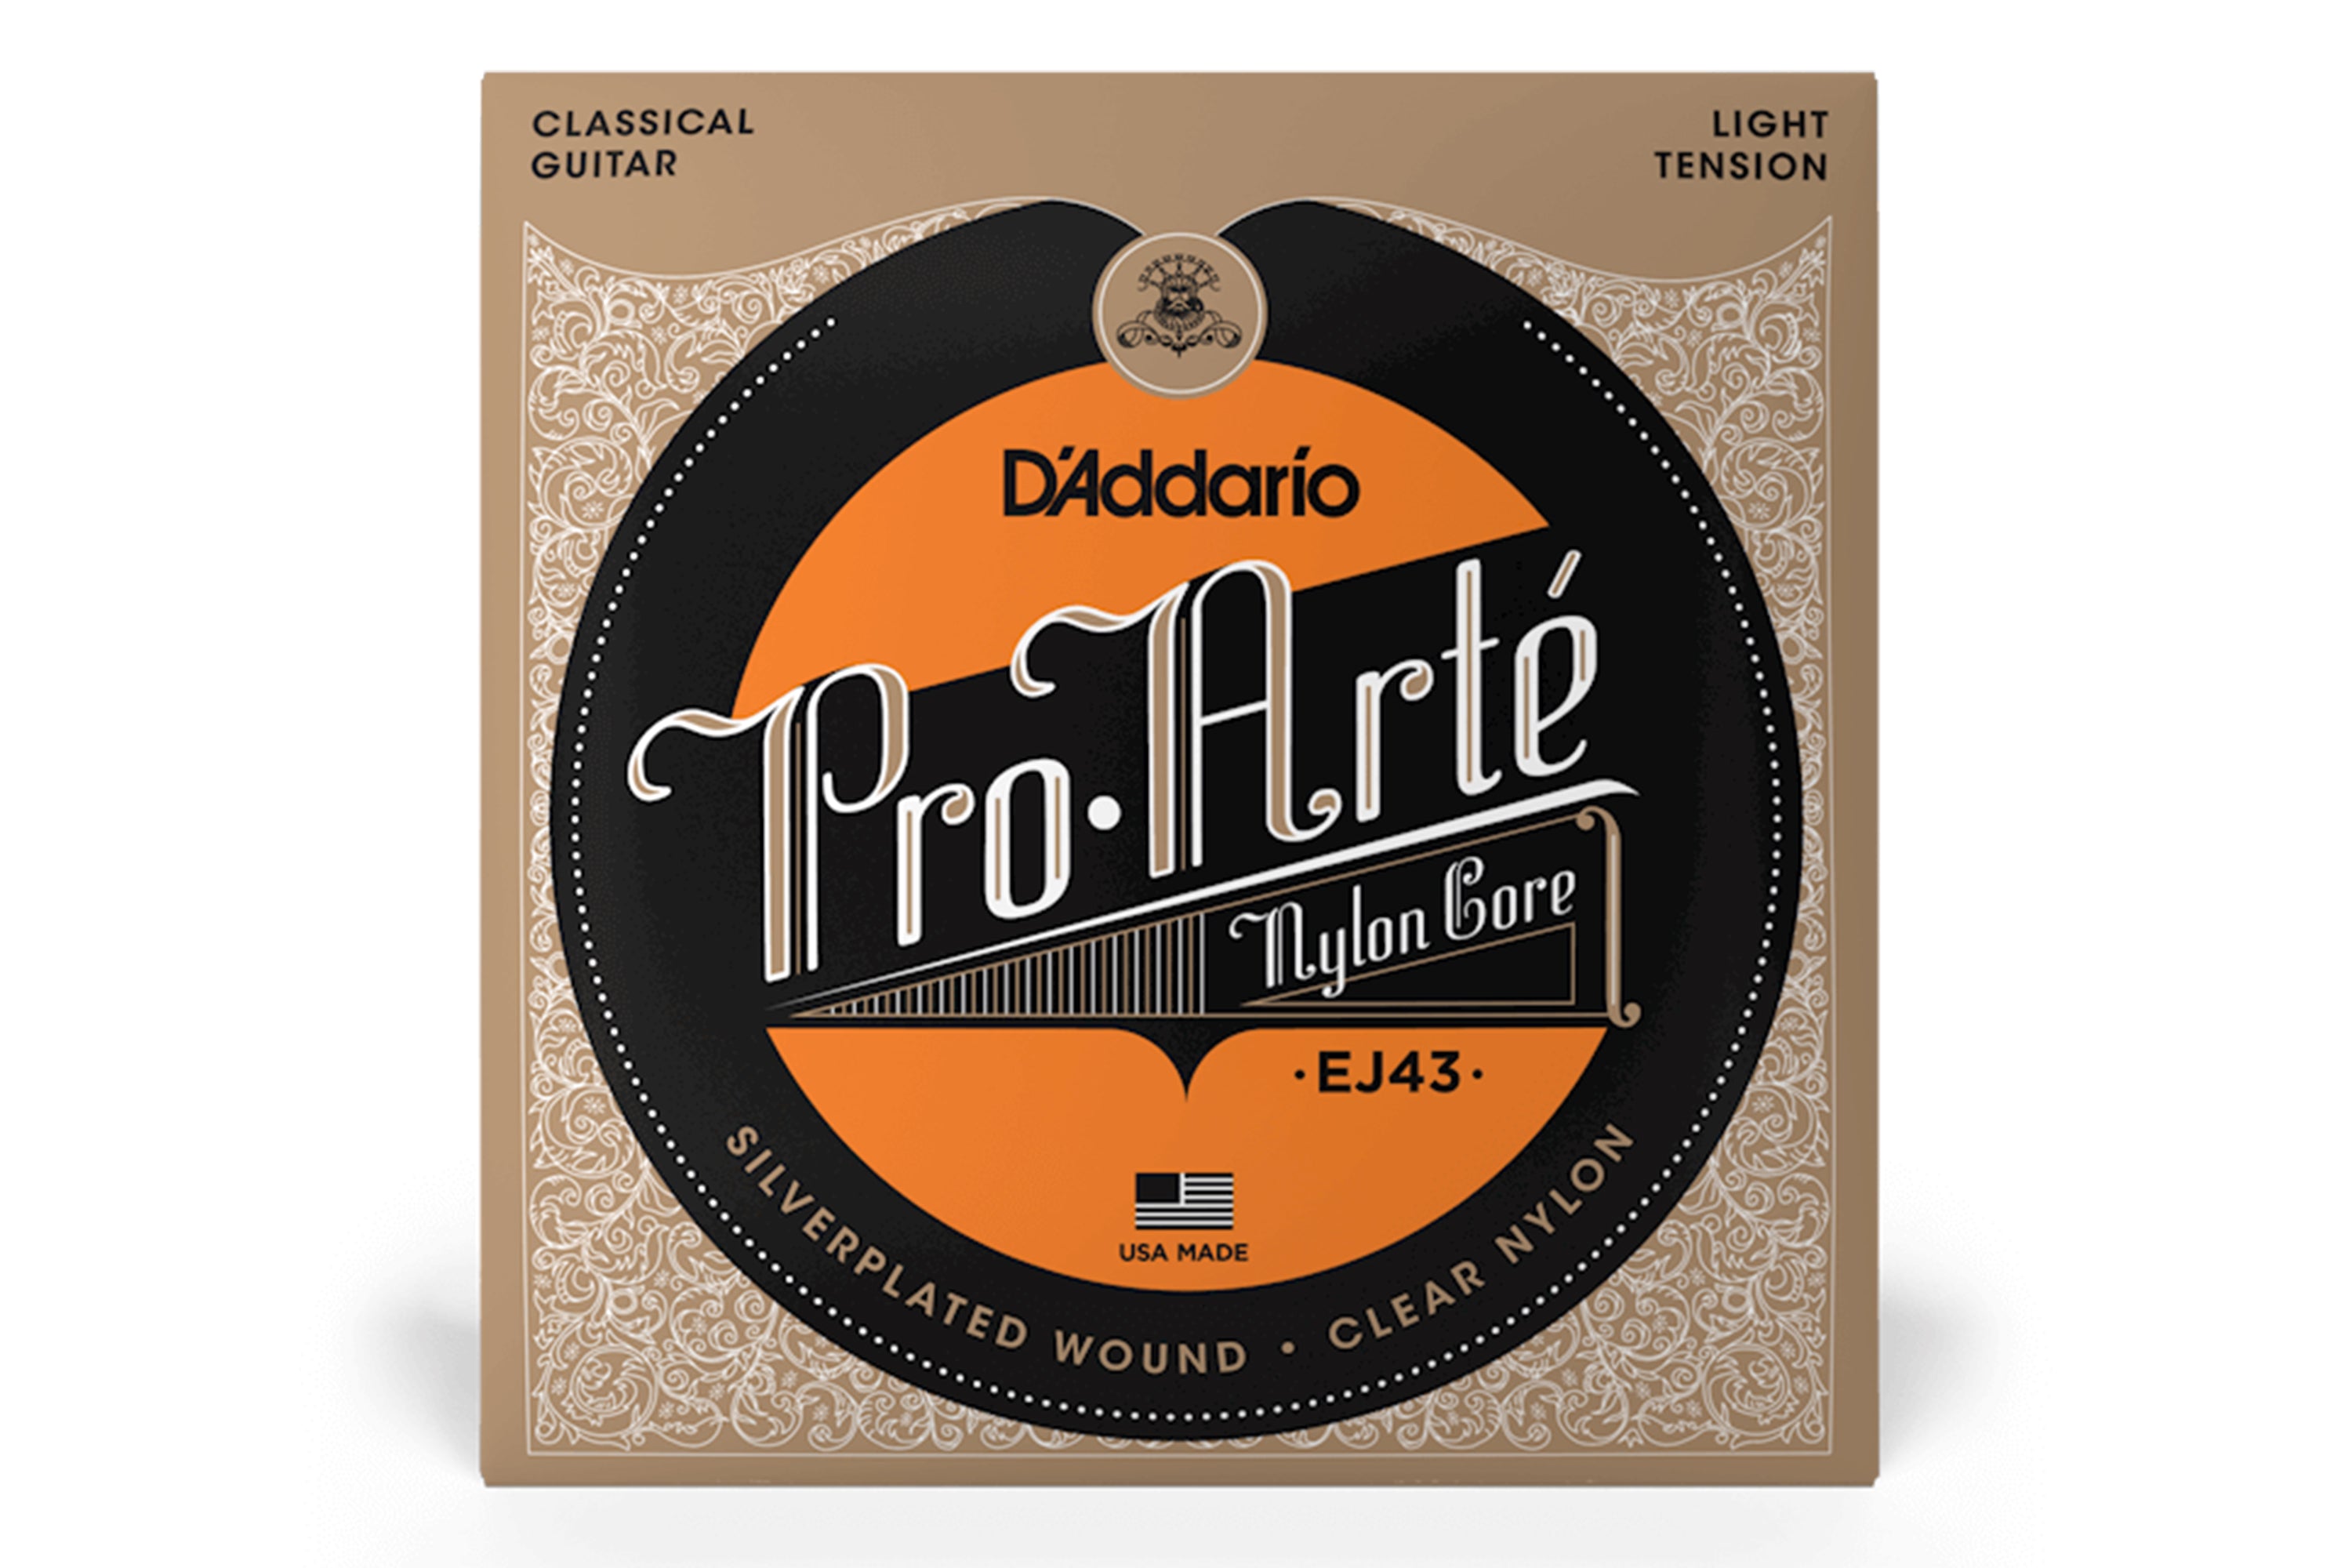 D'Addario EJ43 Pro-Arte Classical Guitar Strings - Light Tension